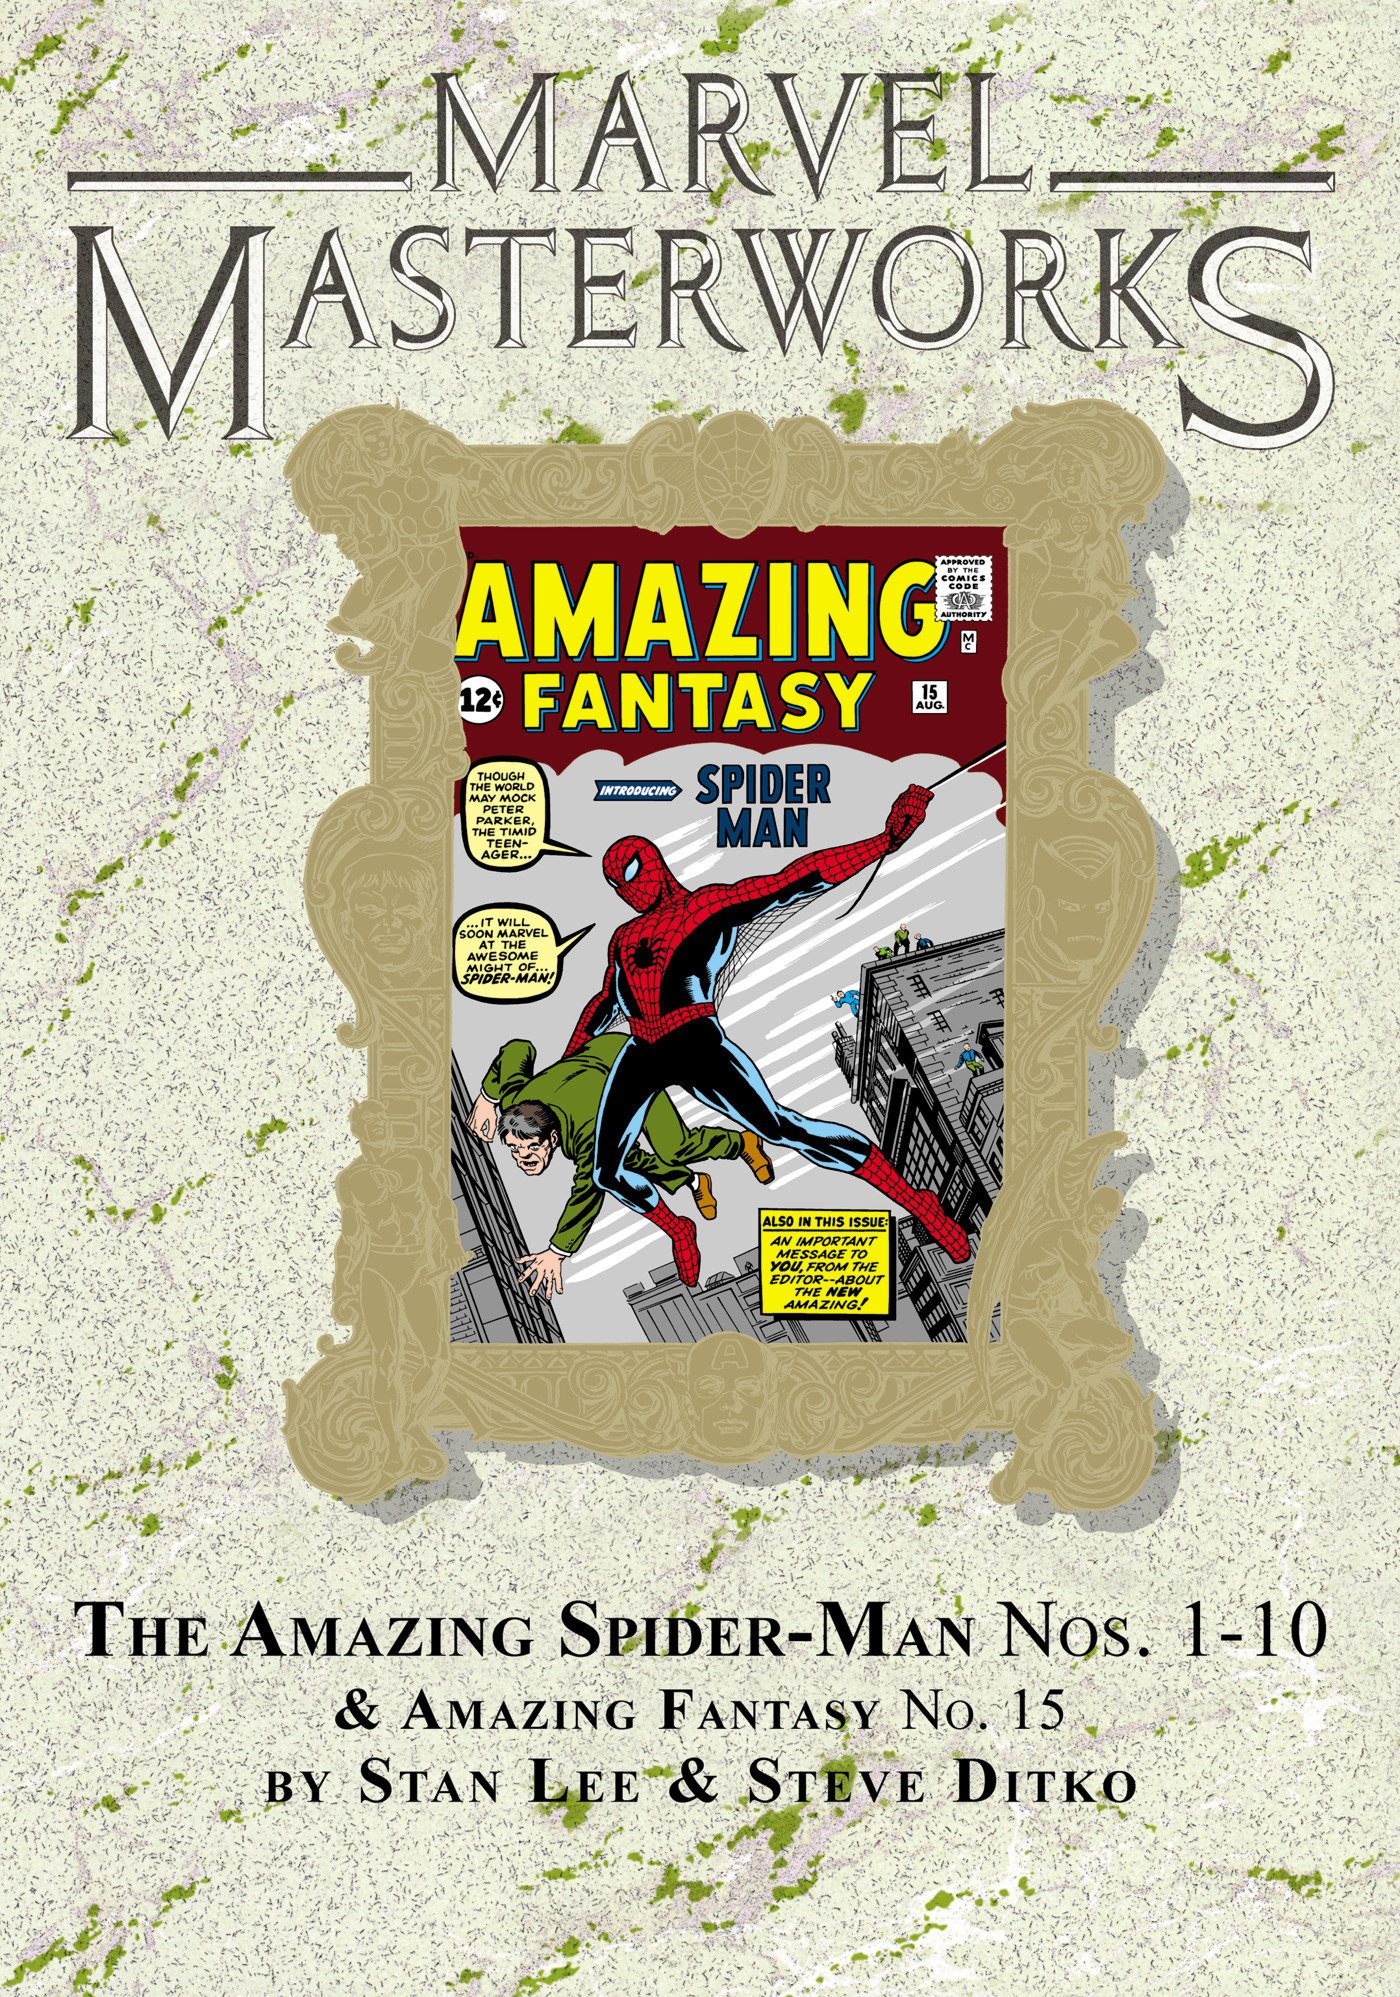 Marvel Masterworks Amazing Spider-Man Hardcover Volume 1 Direct Market Variant (Remasterworks)